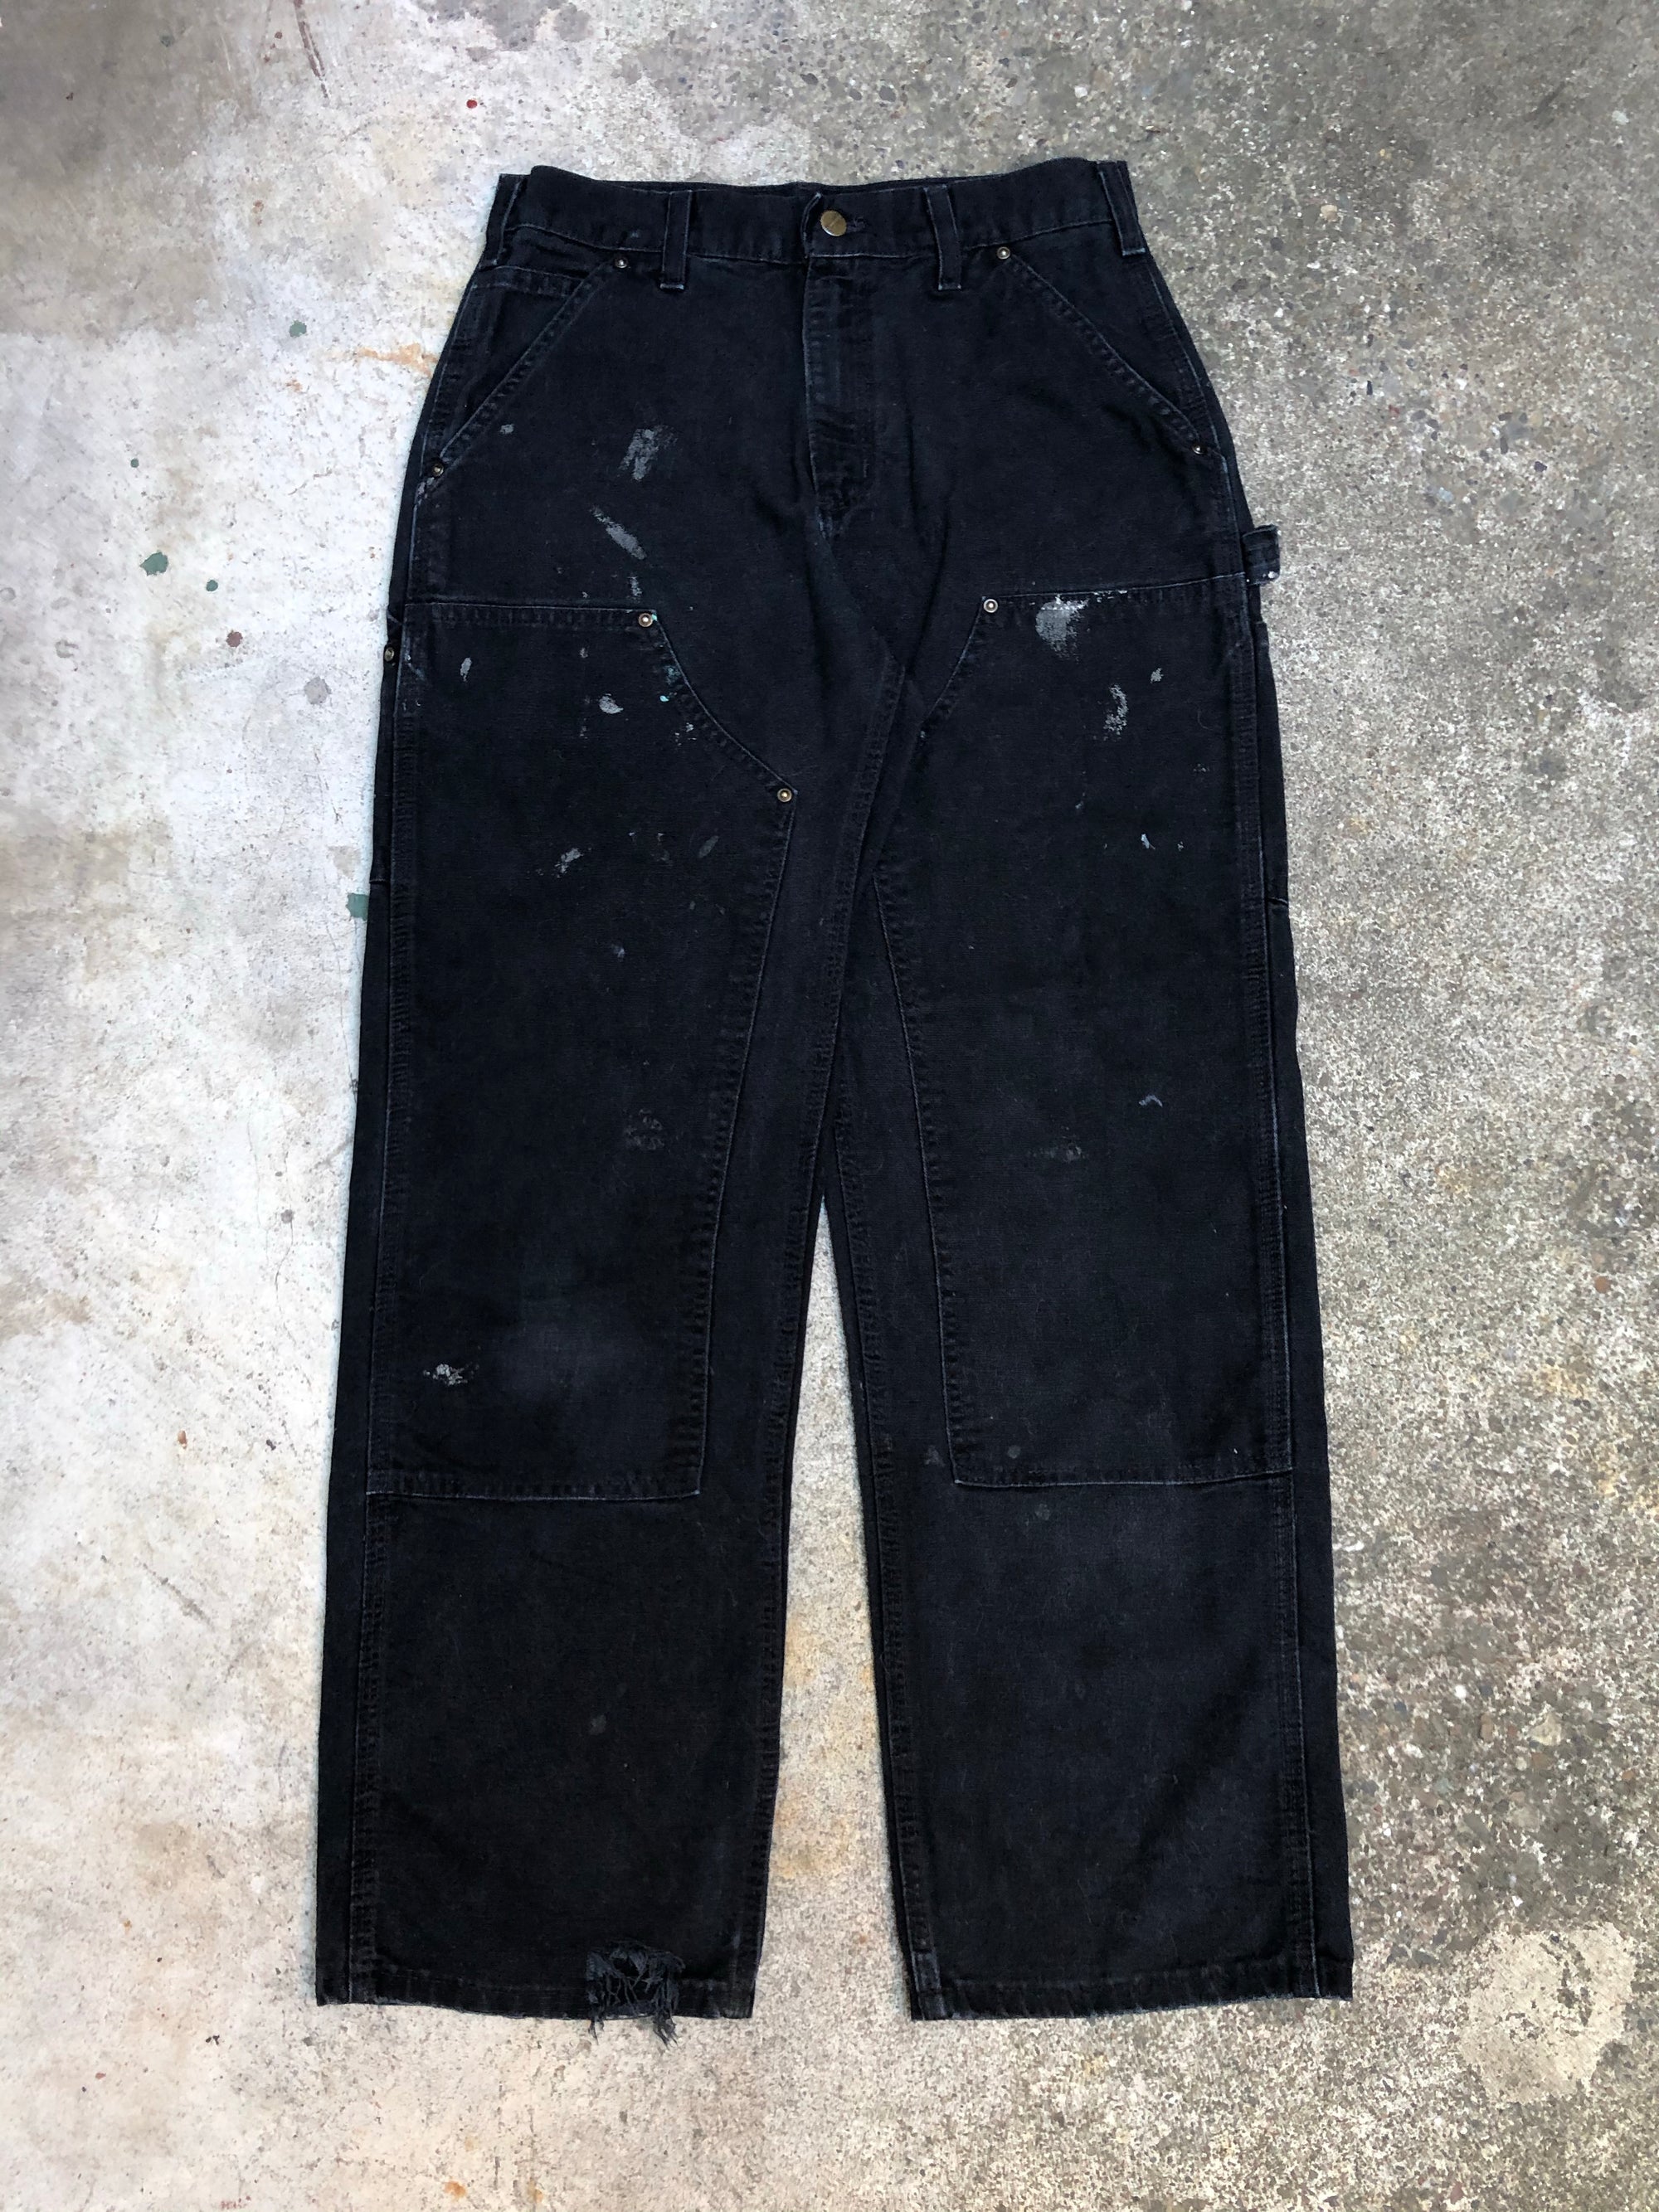 Carhartt B136 Black Double Front Knee Work Pants (29X30)